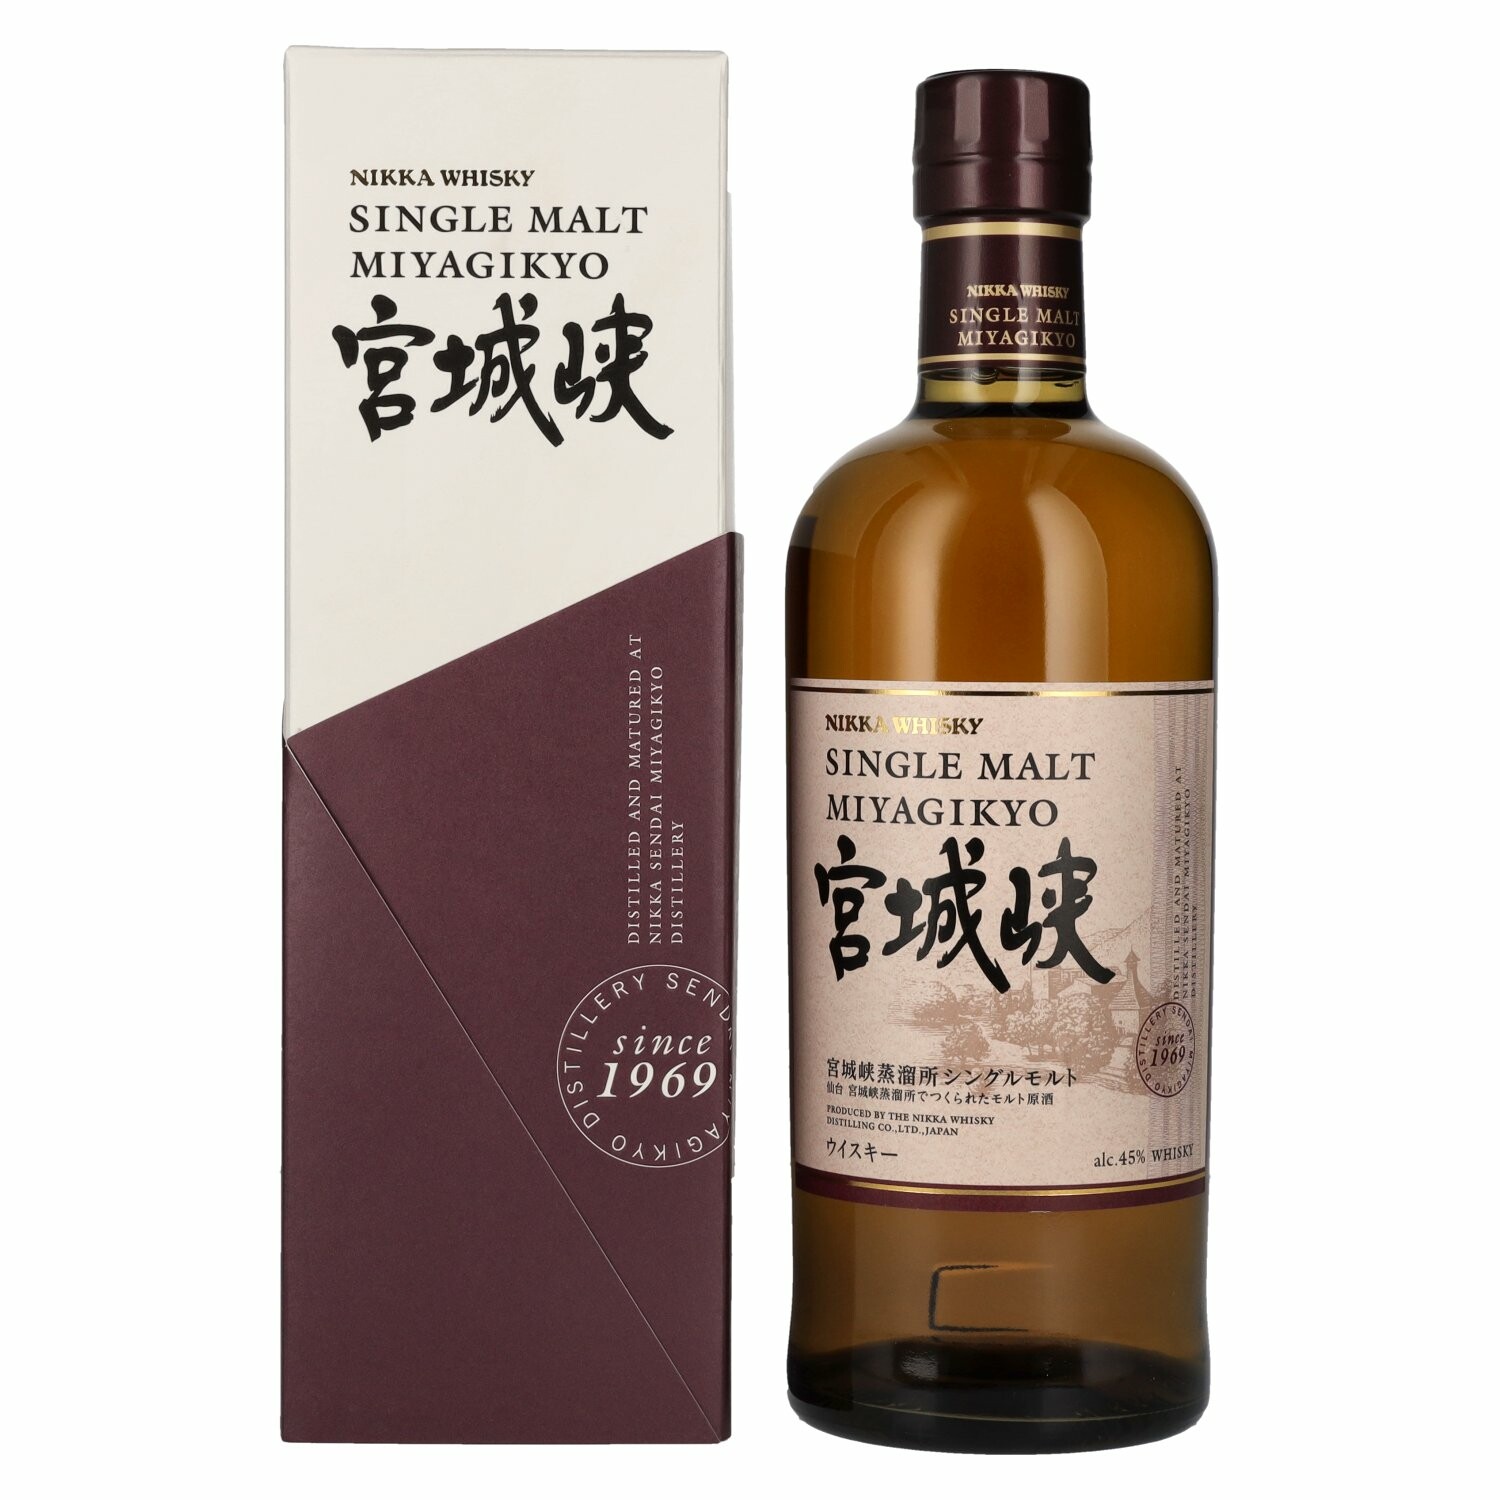 Nikka Miyagikyo Single Malt Whisky 45% Vol. 0,7l in Giftbox